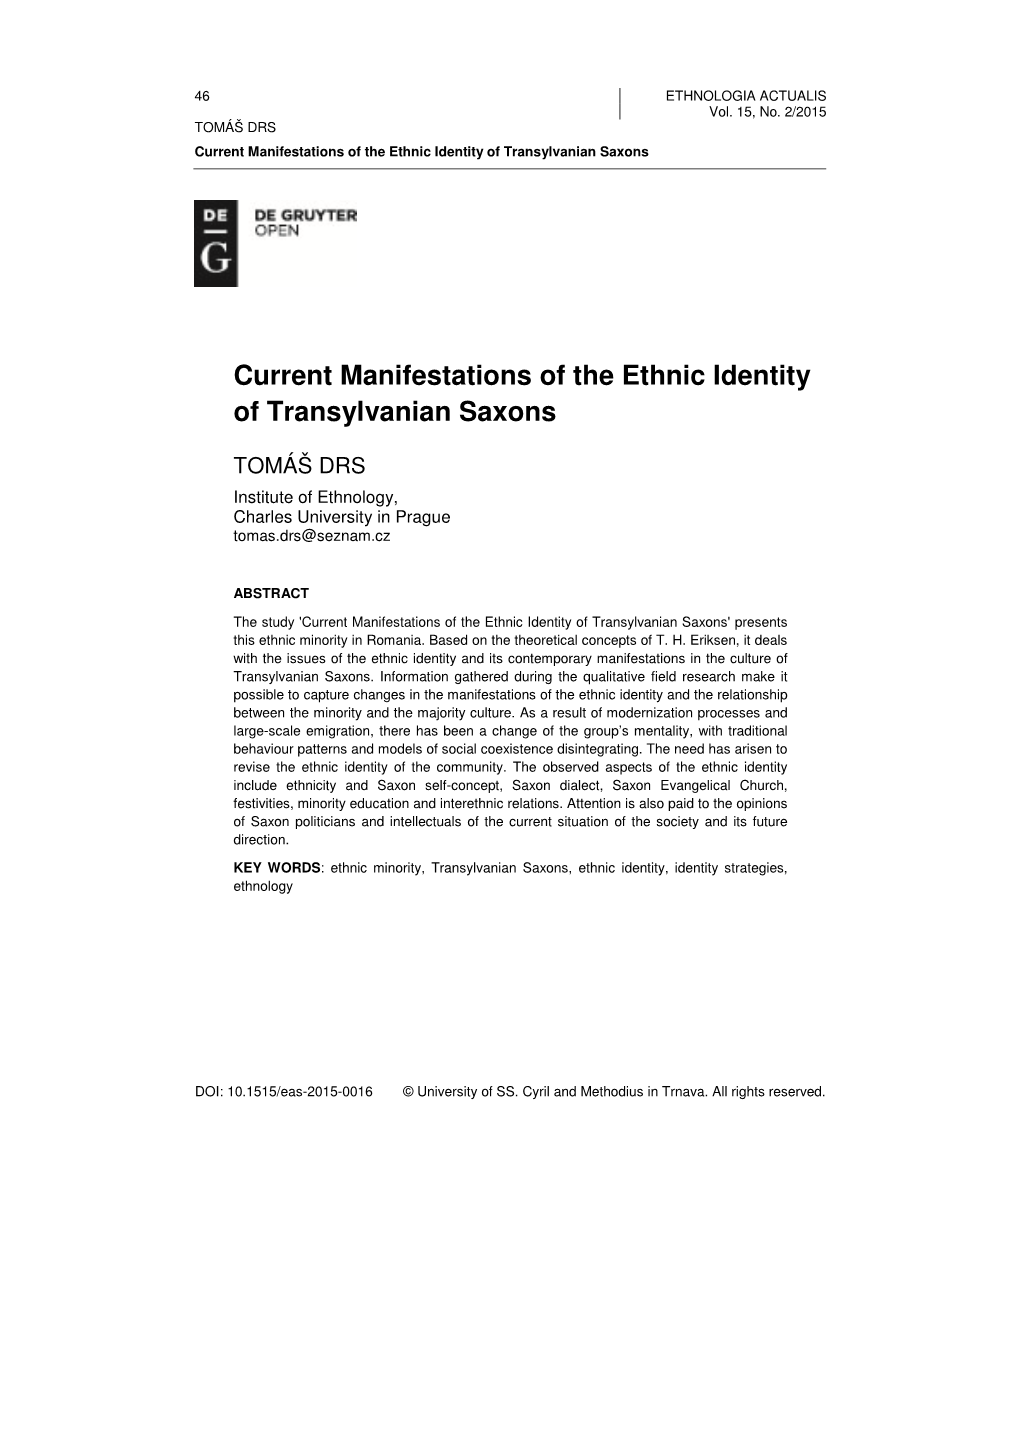 Current Manifestations of the Ethnic Identity of Transylvanian Saxons